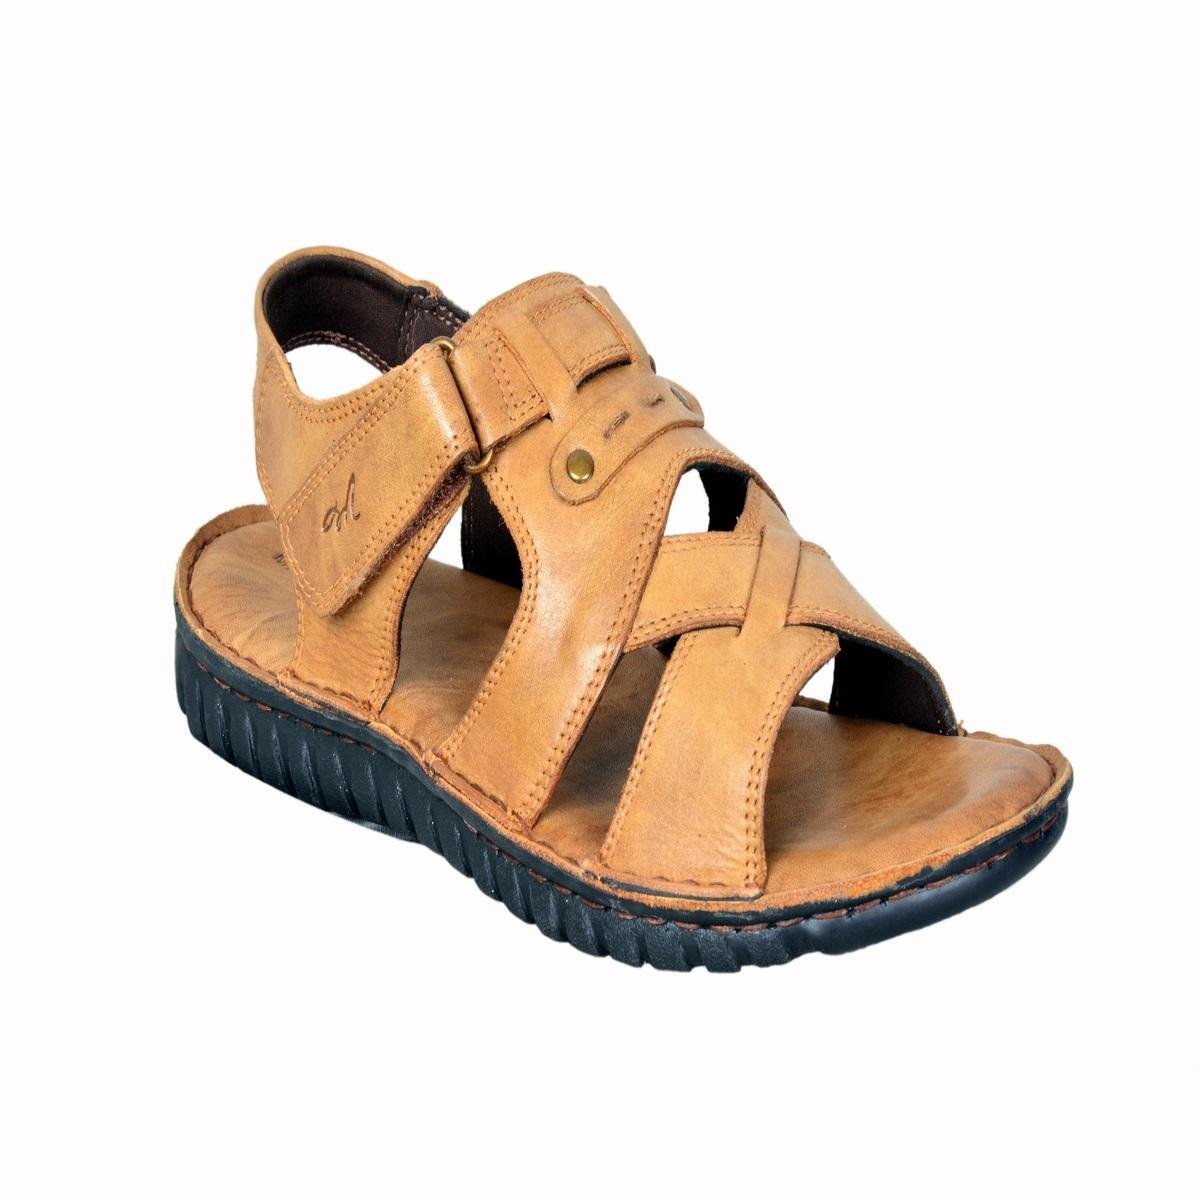 Buy Men Blue Casual Sandals Online | SKU: 18-1277-45-40-Metro Shoes